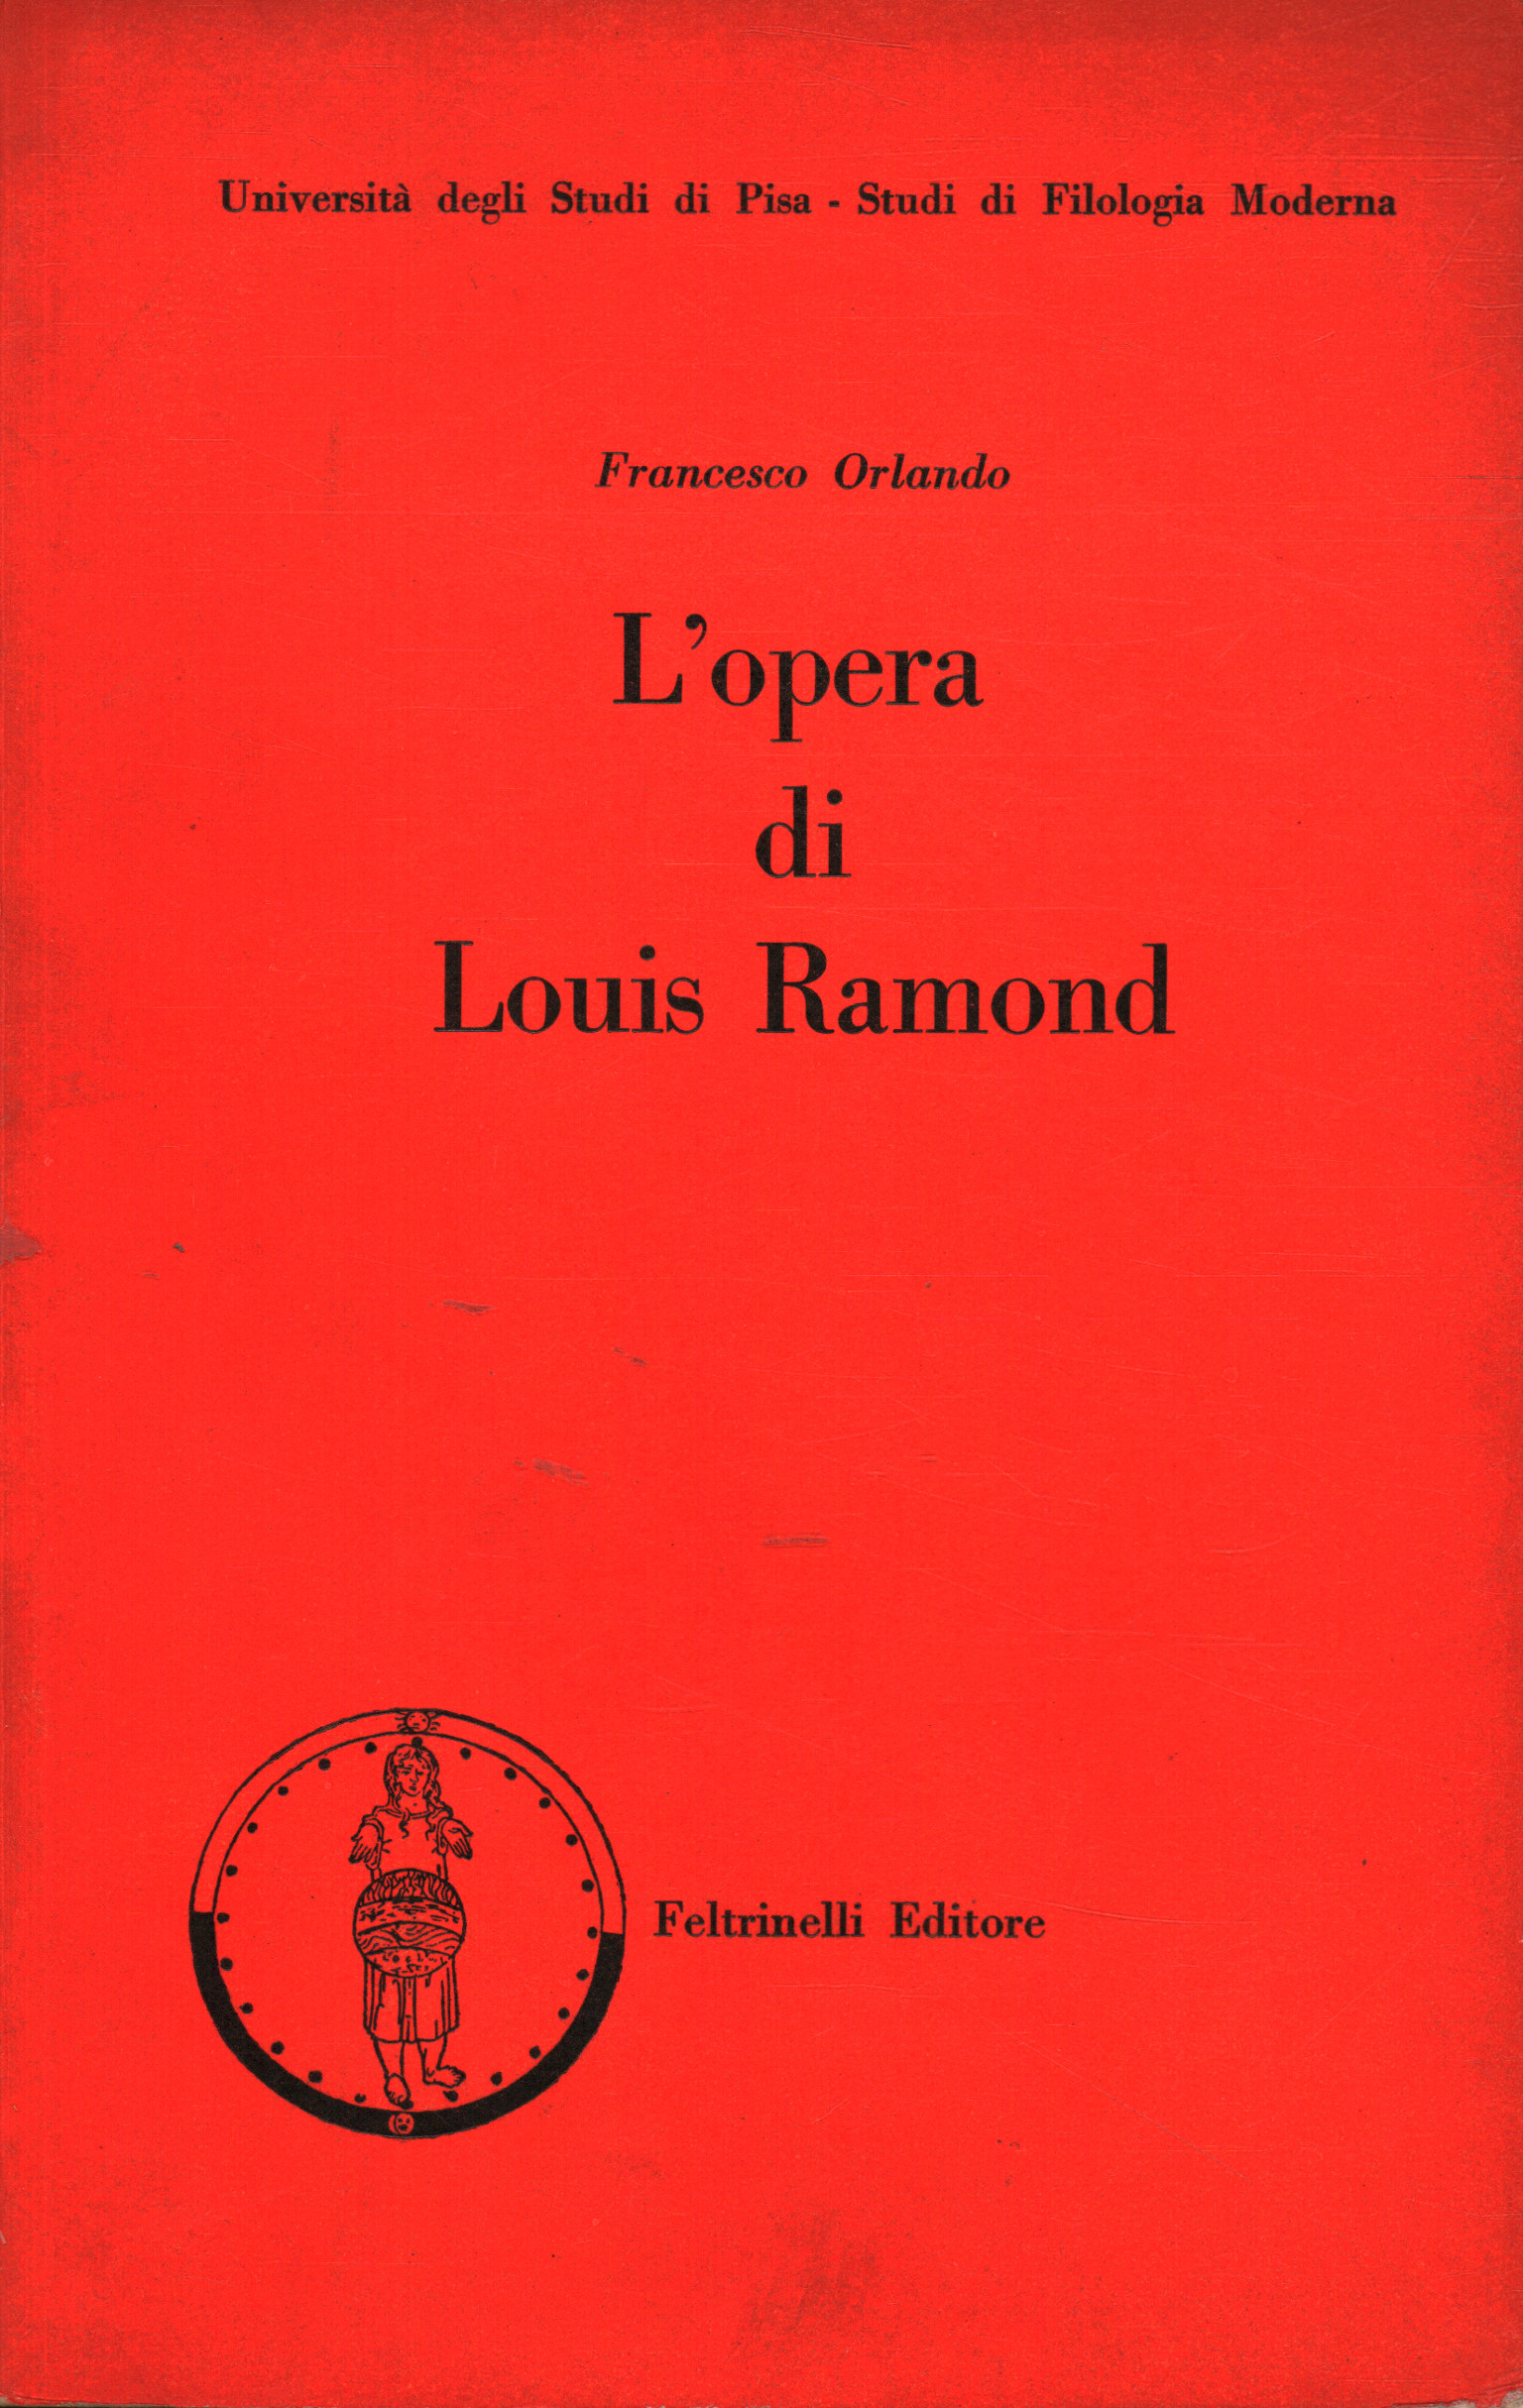 Le travail de Louis Ramond, Francis Orlando